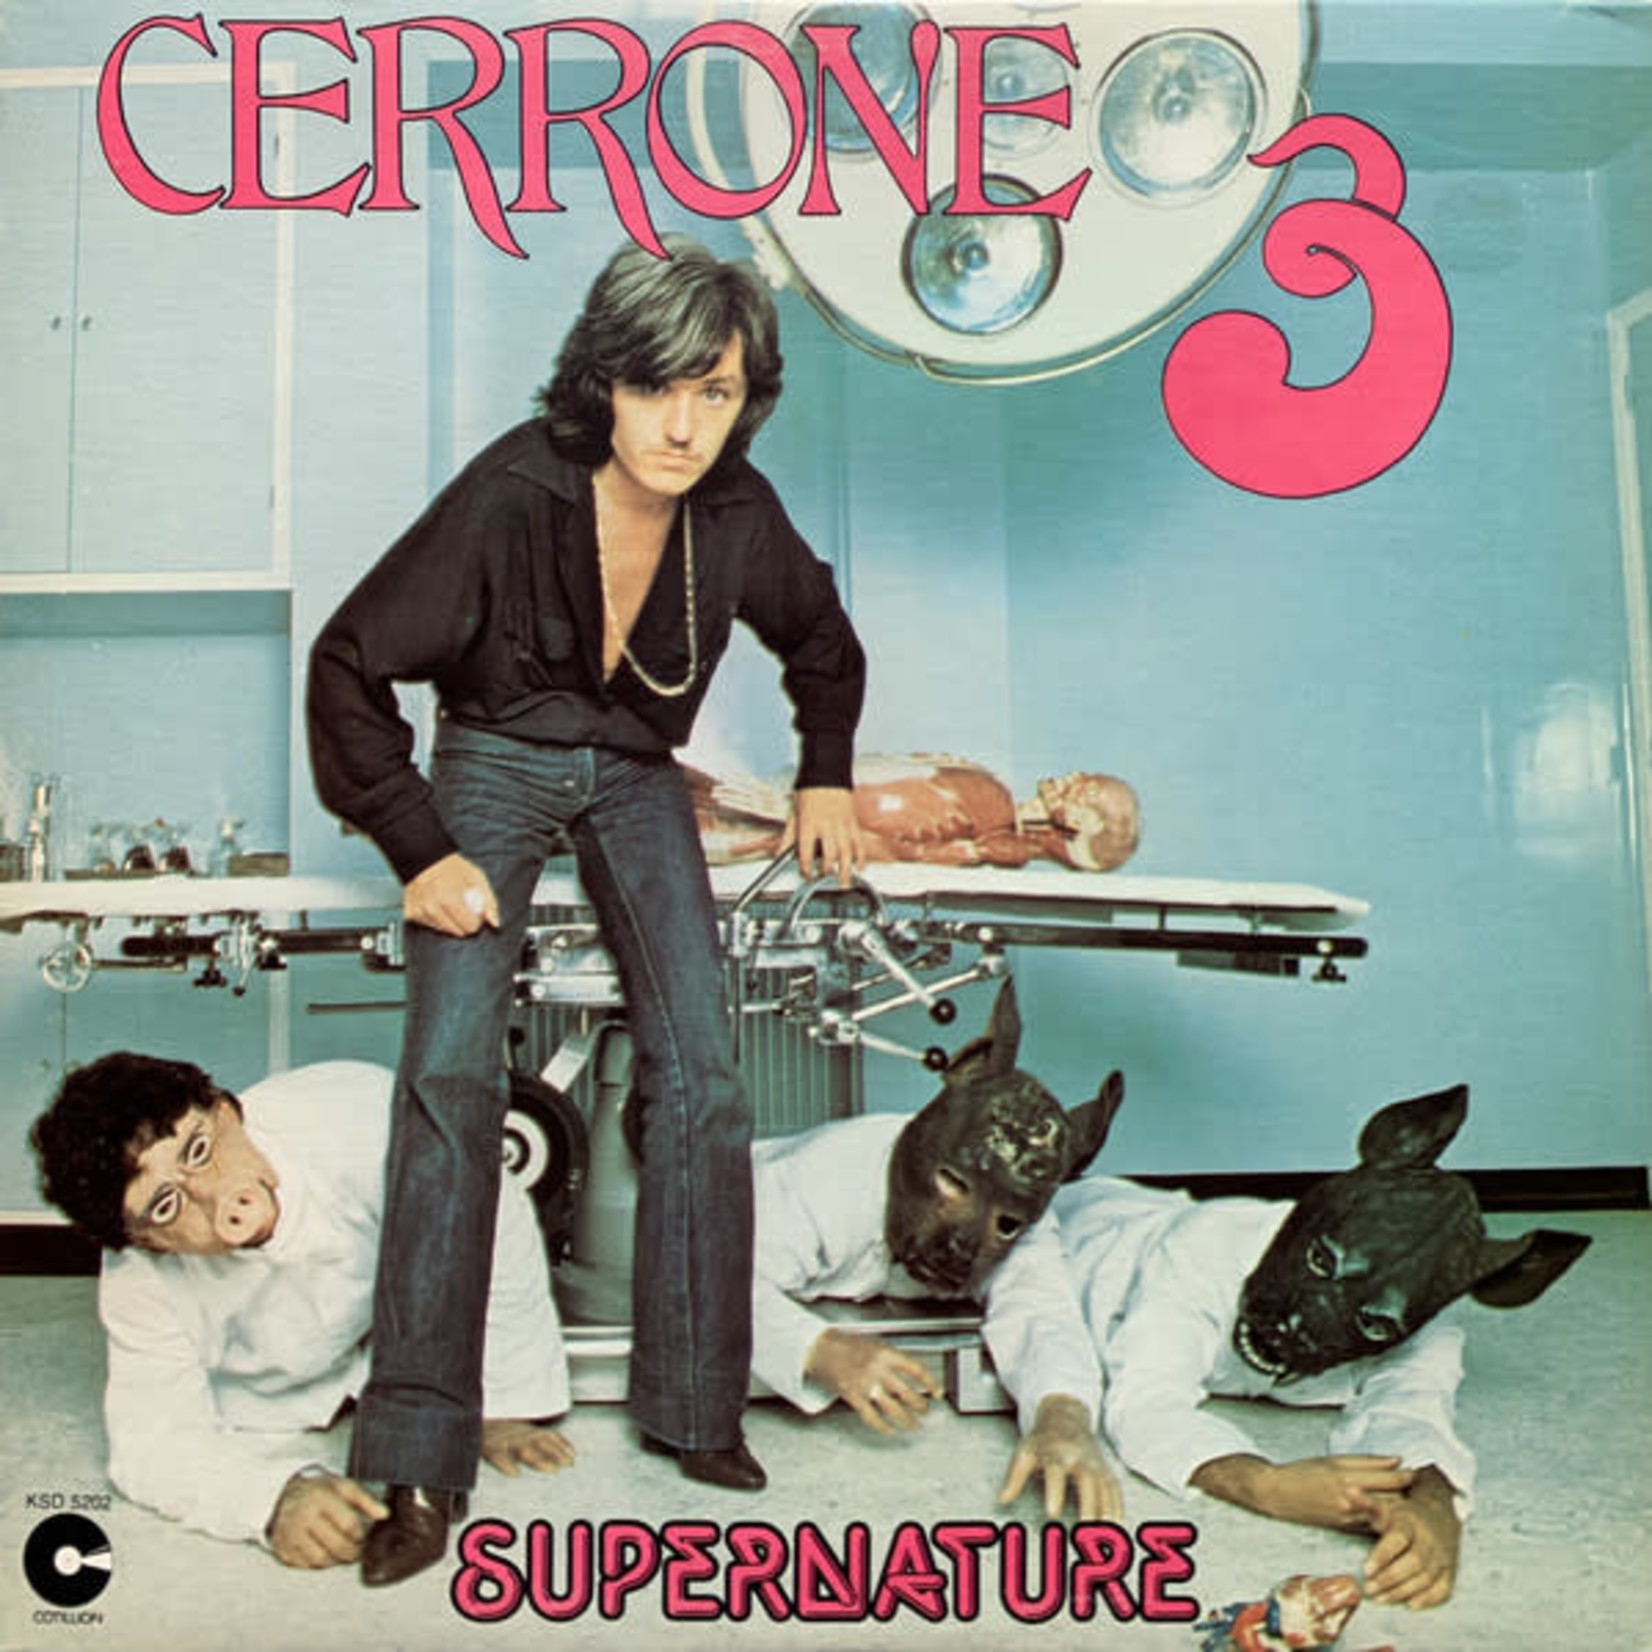 Cerrone Cerrone - Cerrone 3 - Supernature (VG, 1977, LP, Cotillion – KSD 5202)